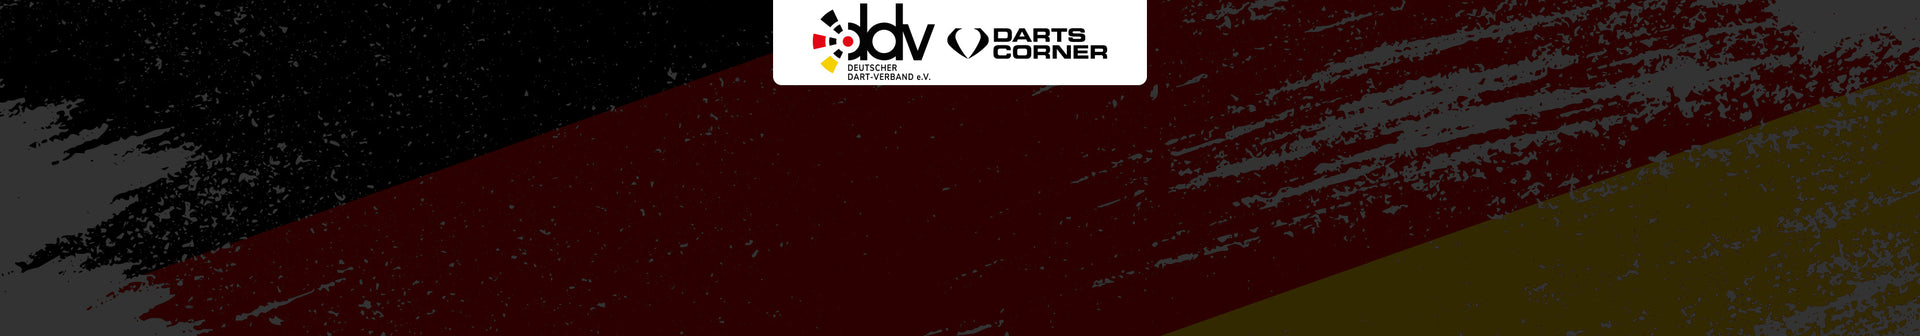 DDV Darts Corner